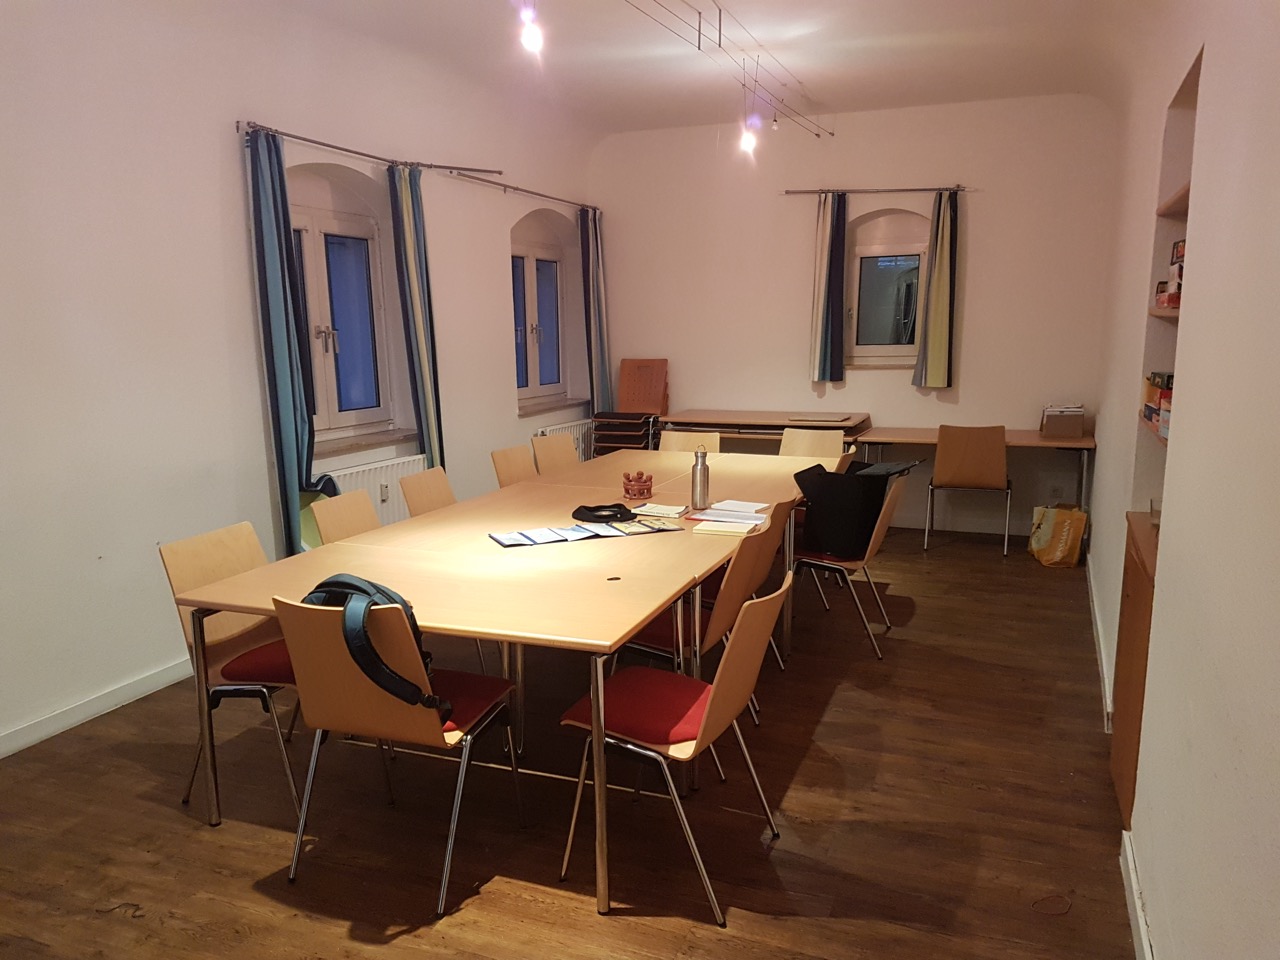 Meeting Room, Bonn, Germany